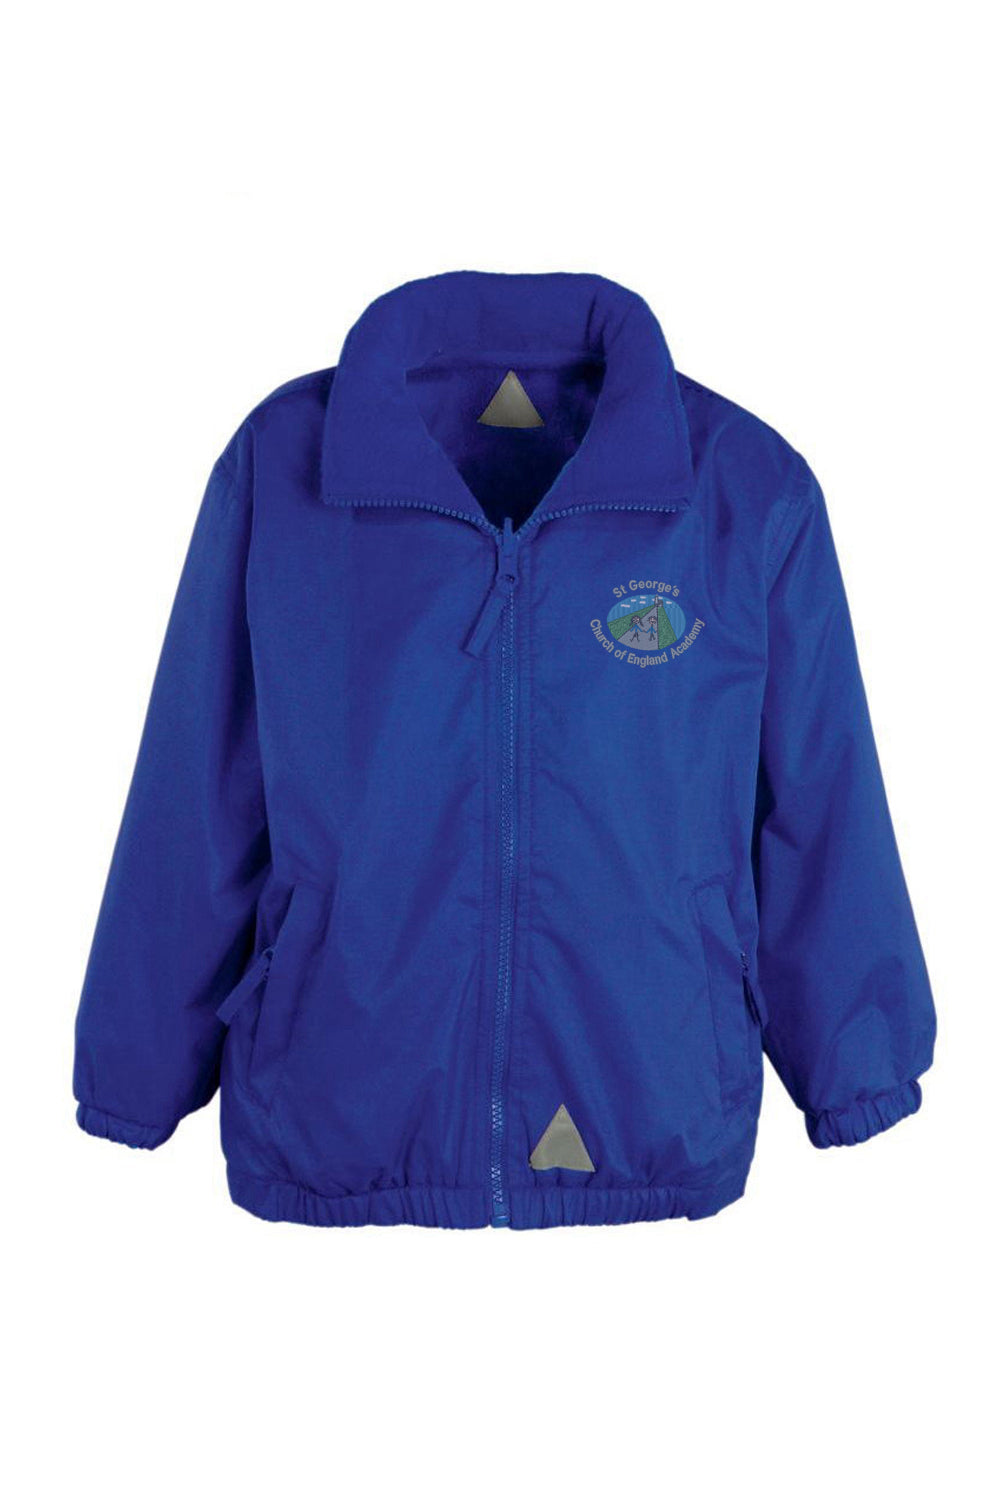 St. George's Primary Royal Blue Shower Jacket